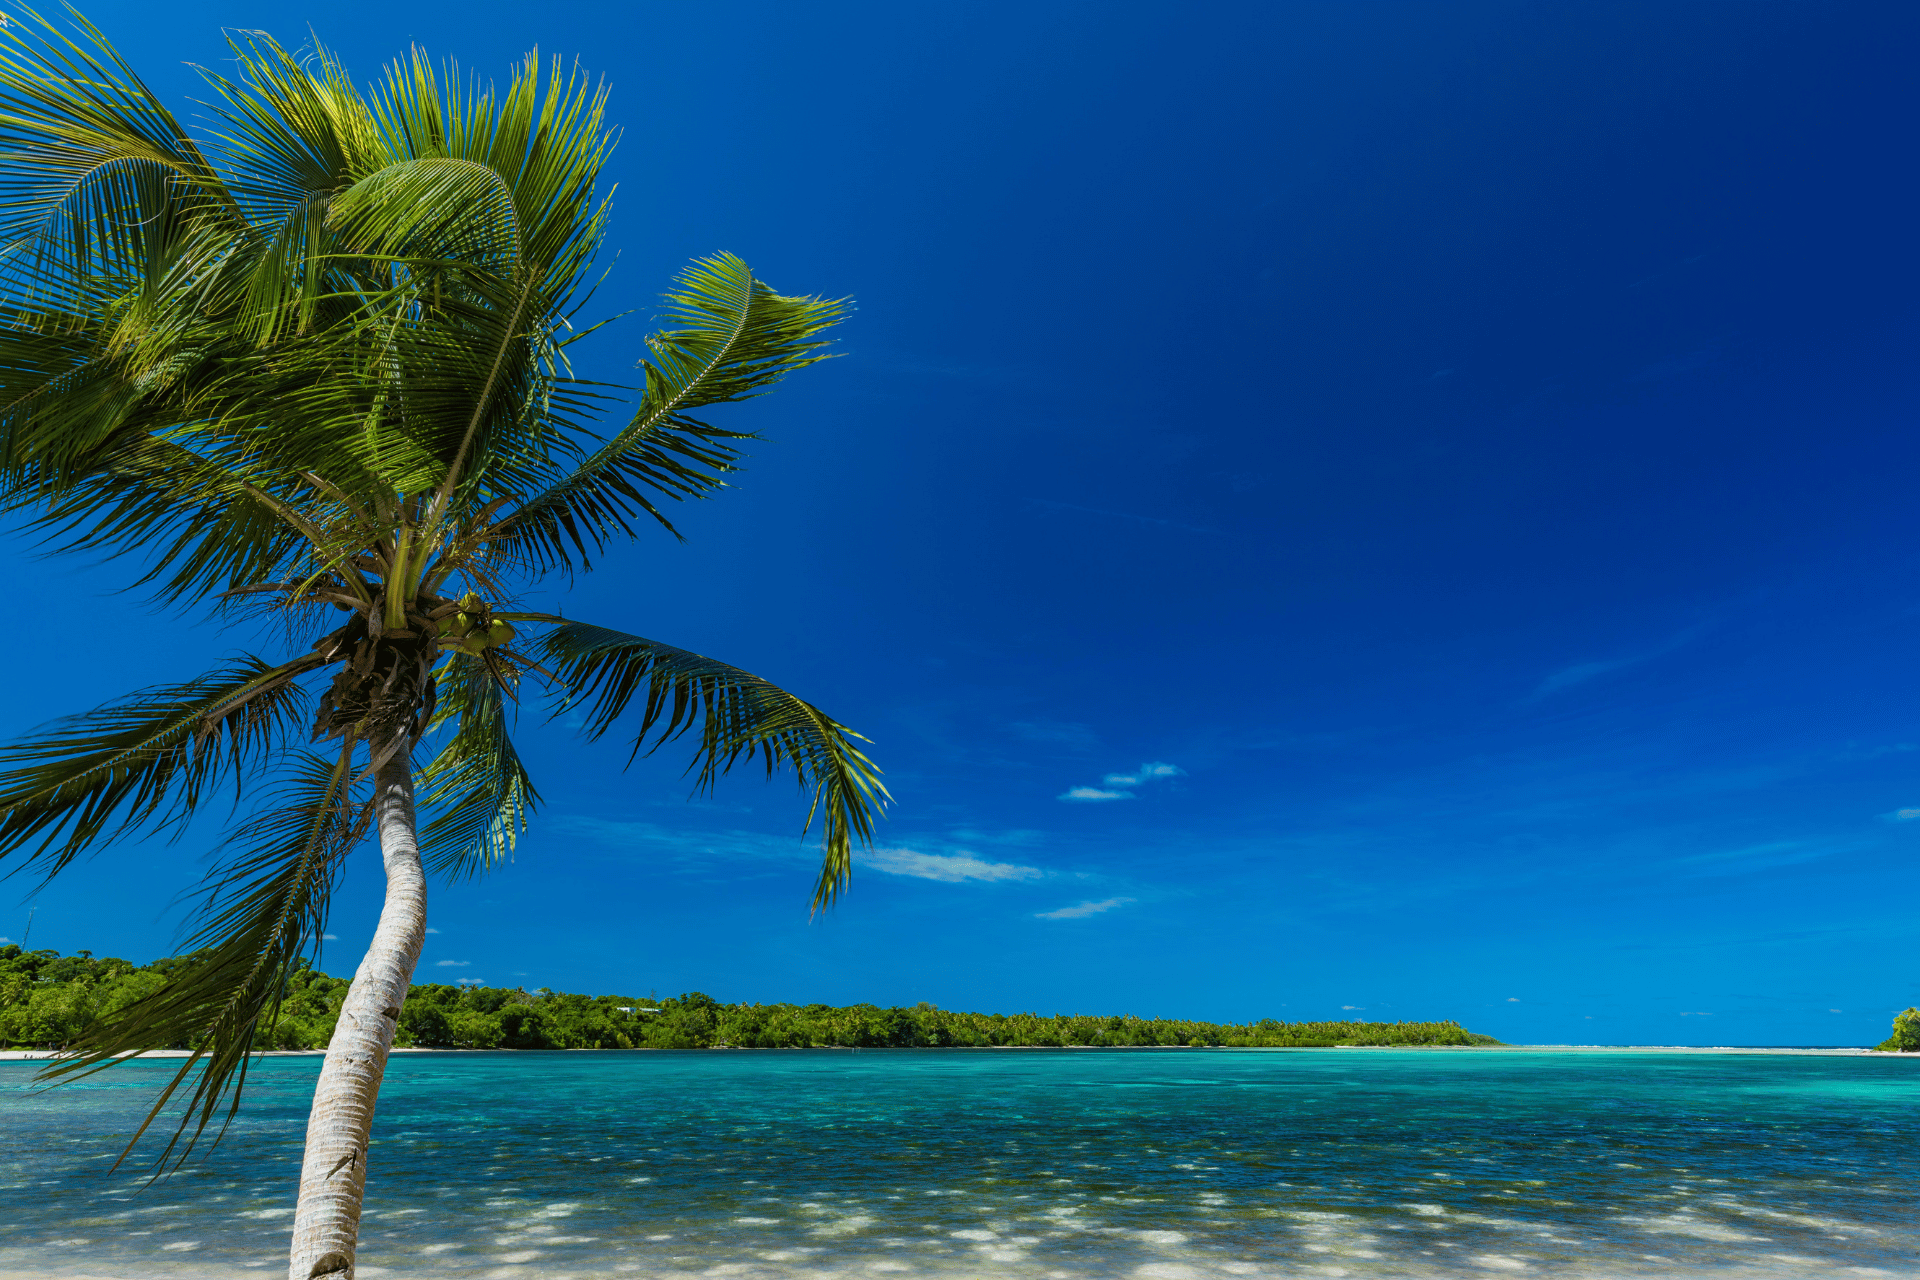 The beautiful waters of the island of Tonga and Samoa